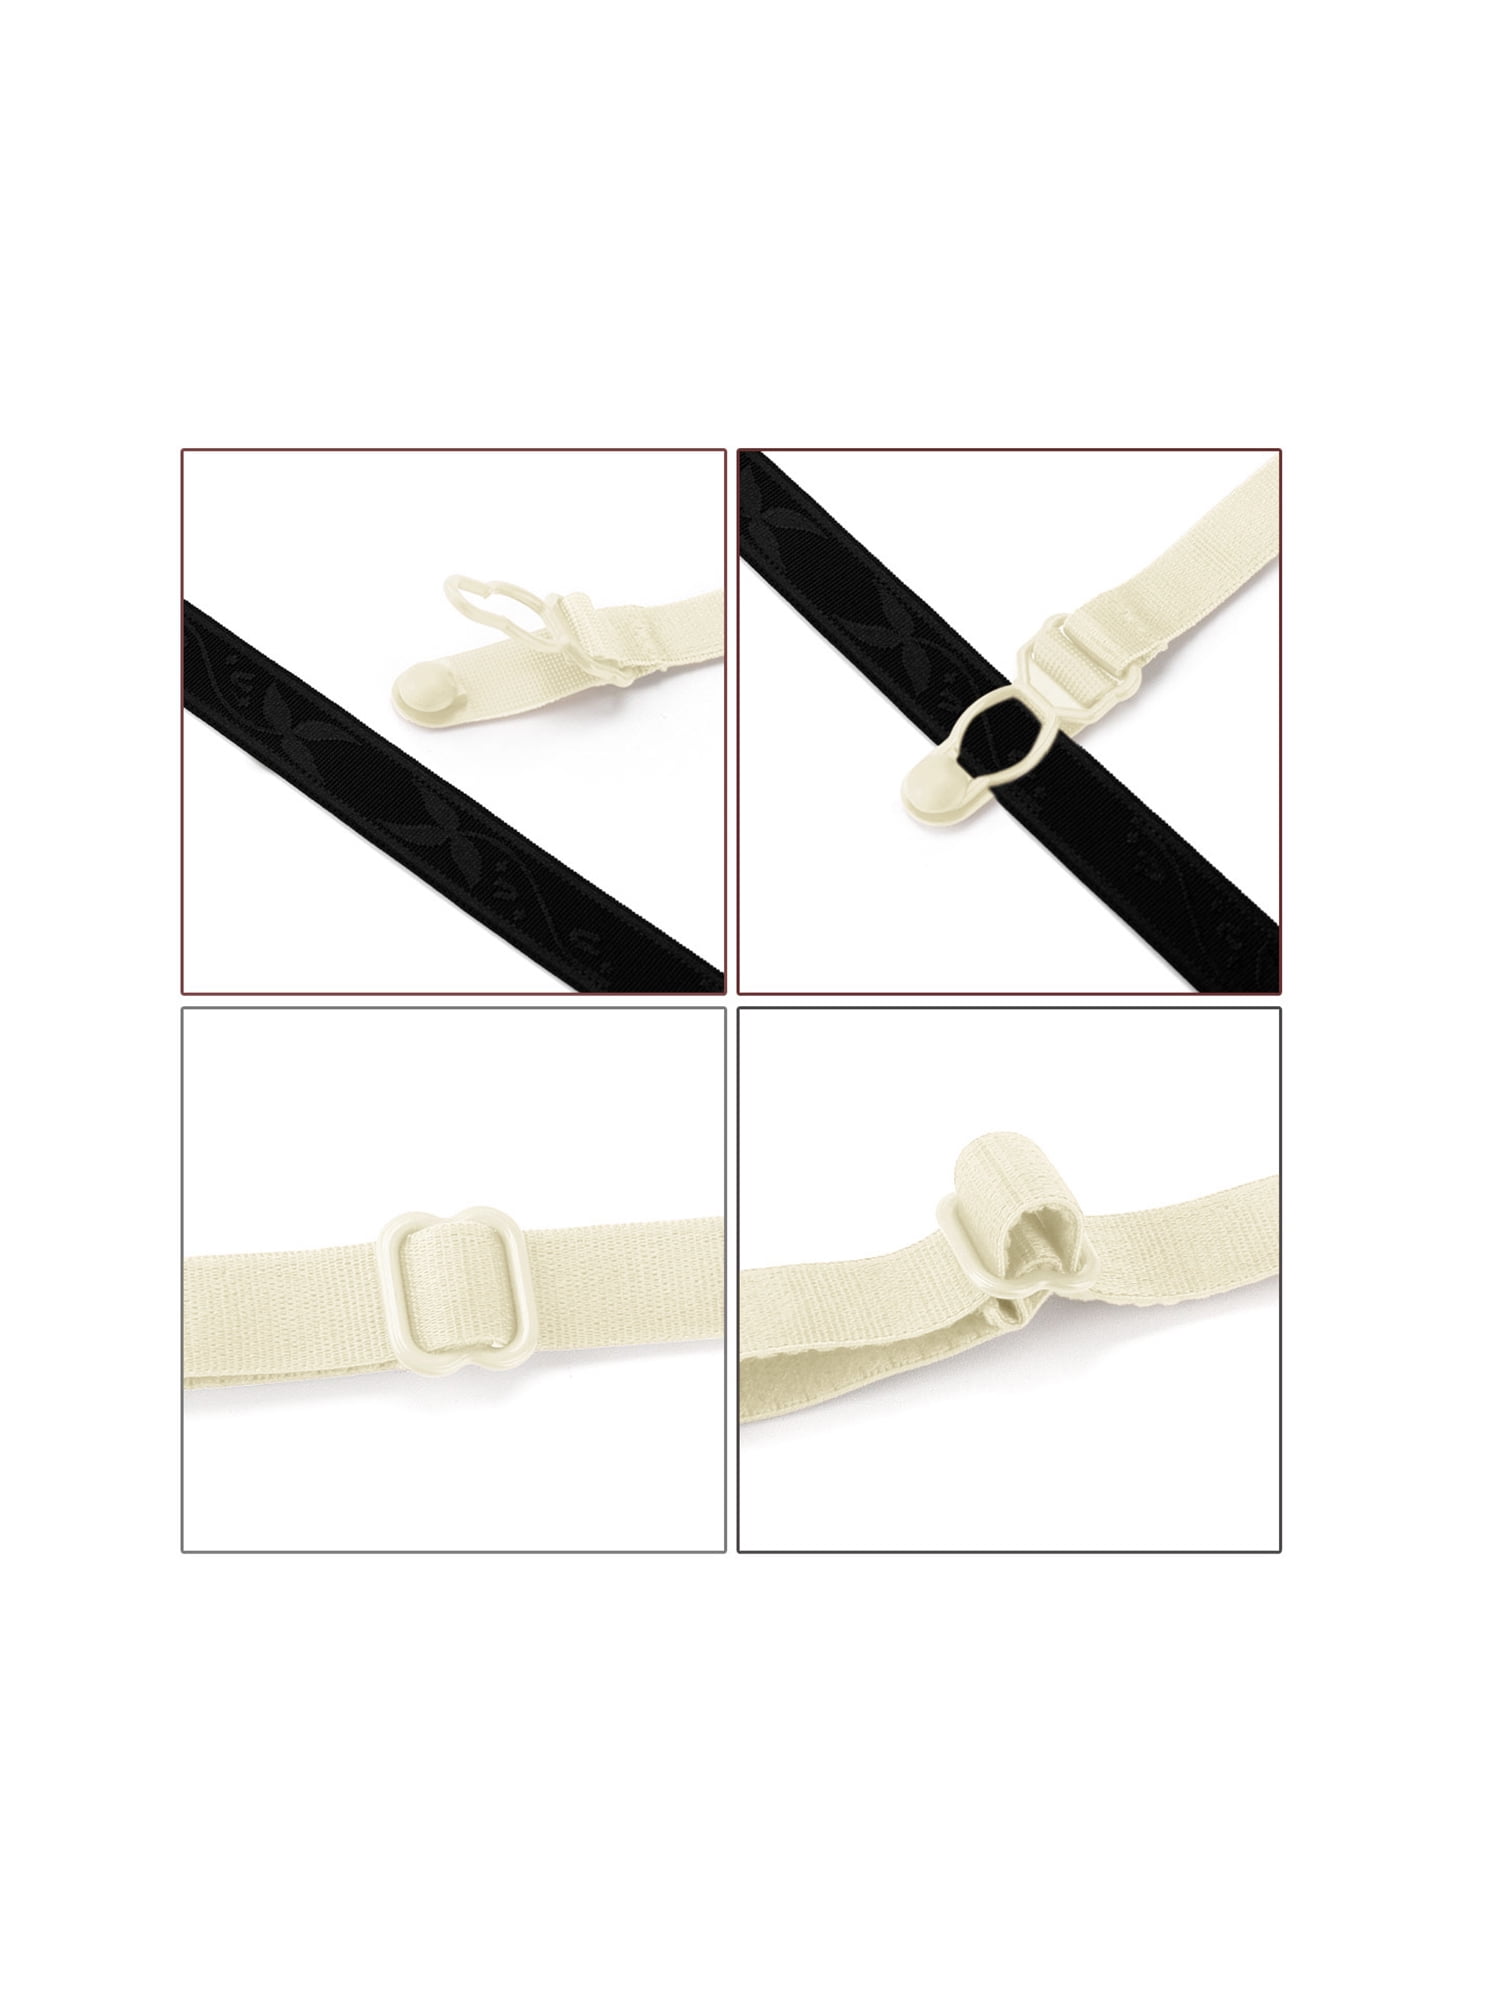 Janext 3 Pieces Bra Strap Clips Elastic Adjustable Non-Slip Strap